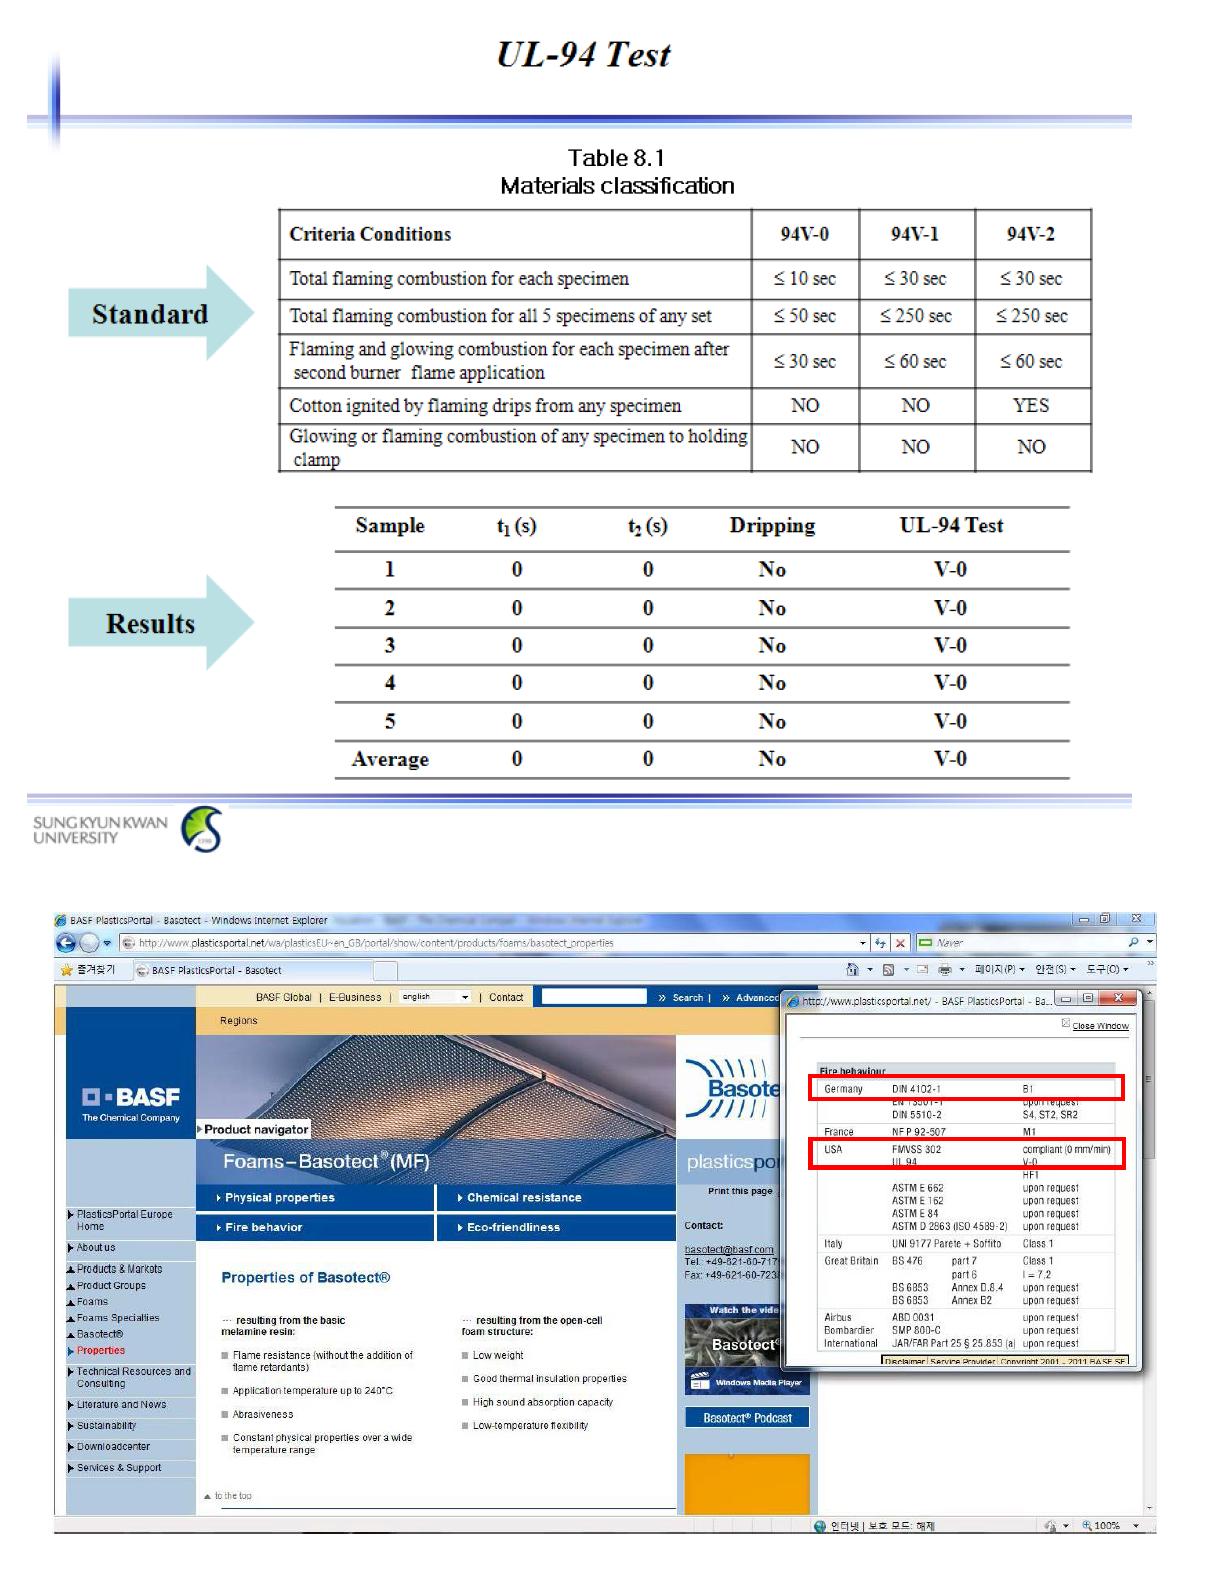 Heat resistance results of melamine foam measured by UL 94 V method